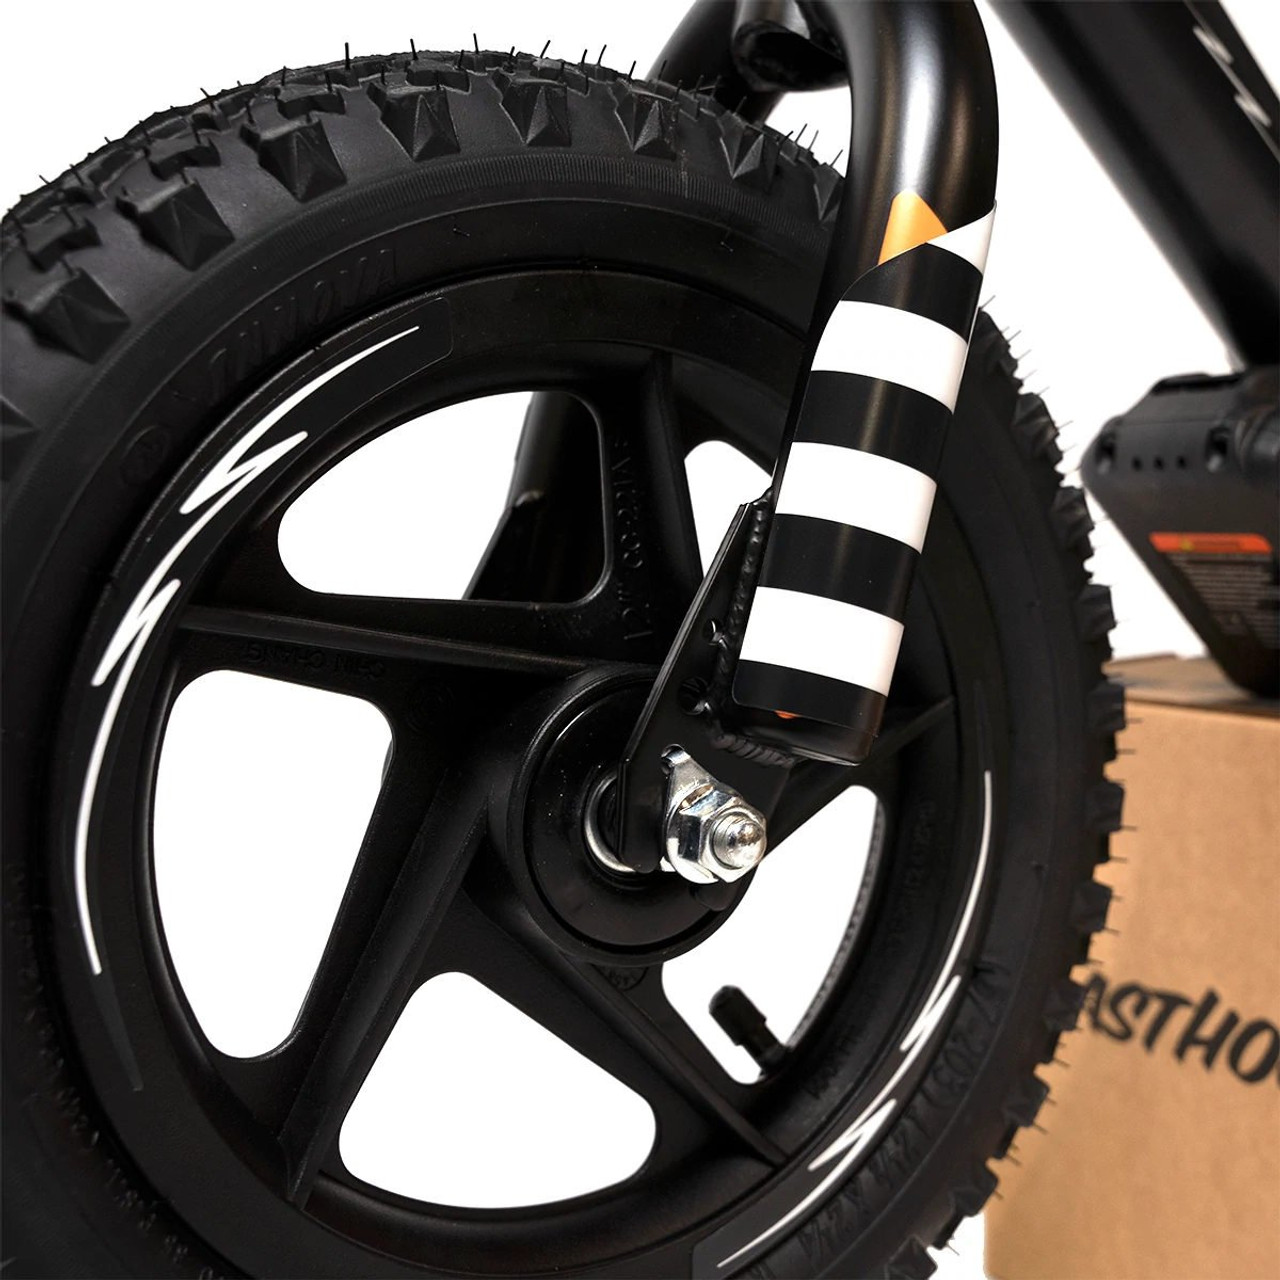 Fasthouse Tribe Stacyc Black Decal Kit - Bikebug